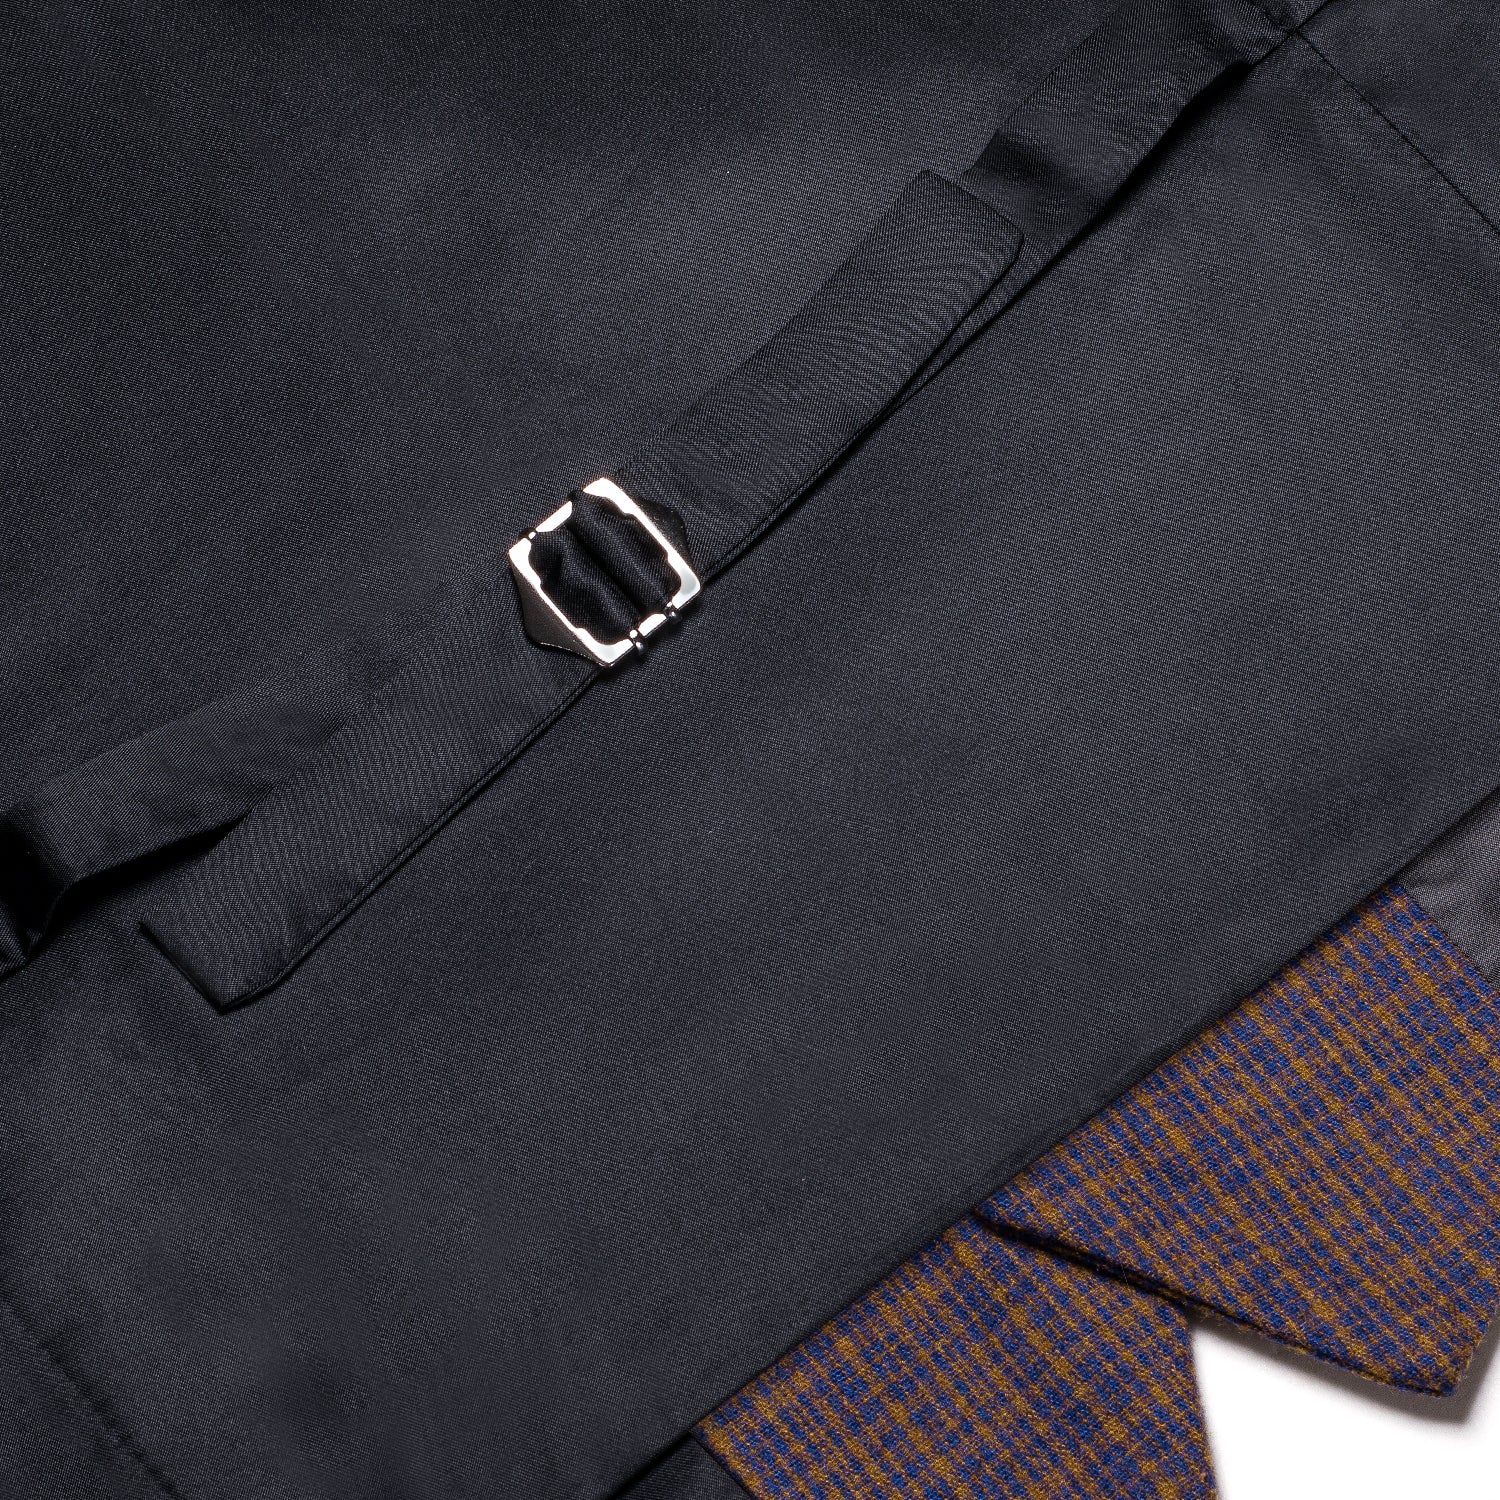 New Blue Golden Plaid Wool Men's Single Vest Waistcoat